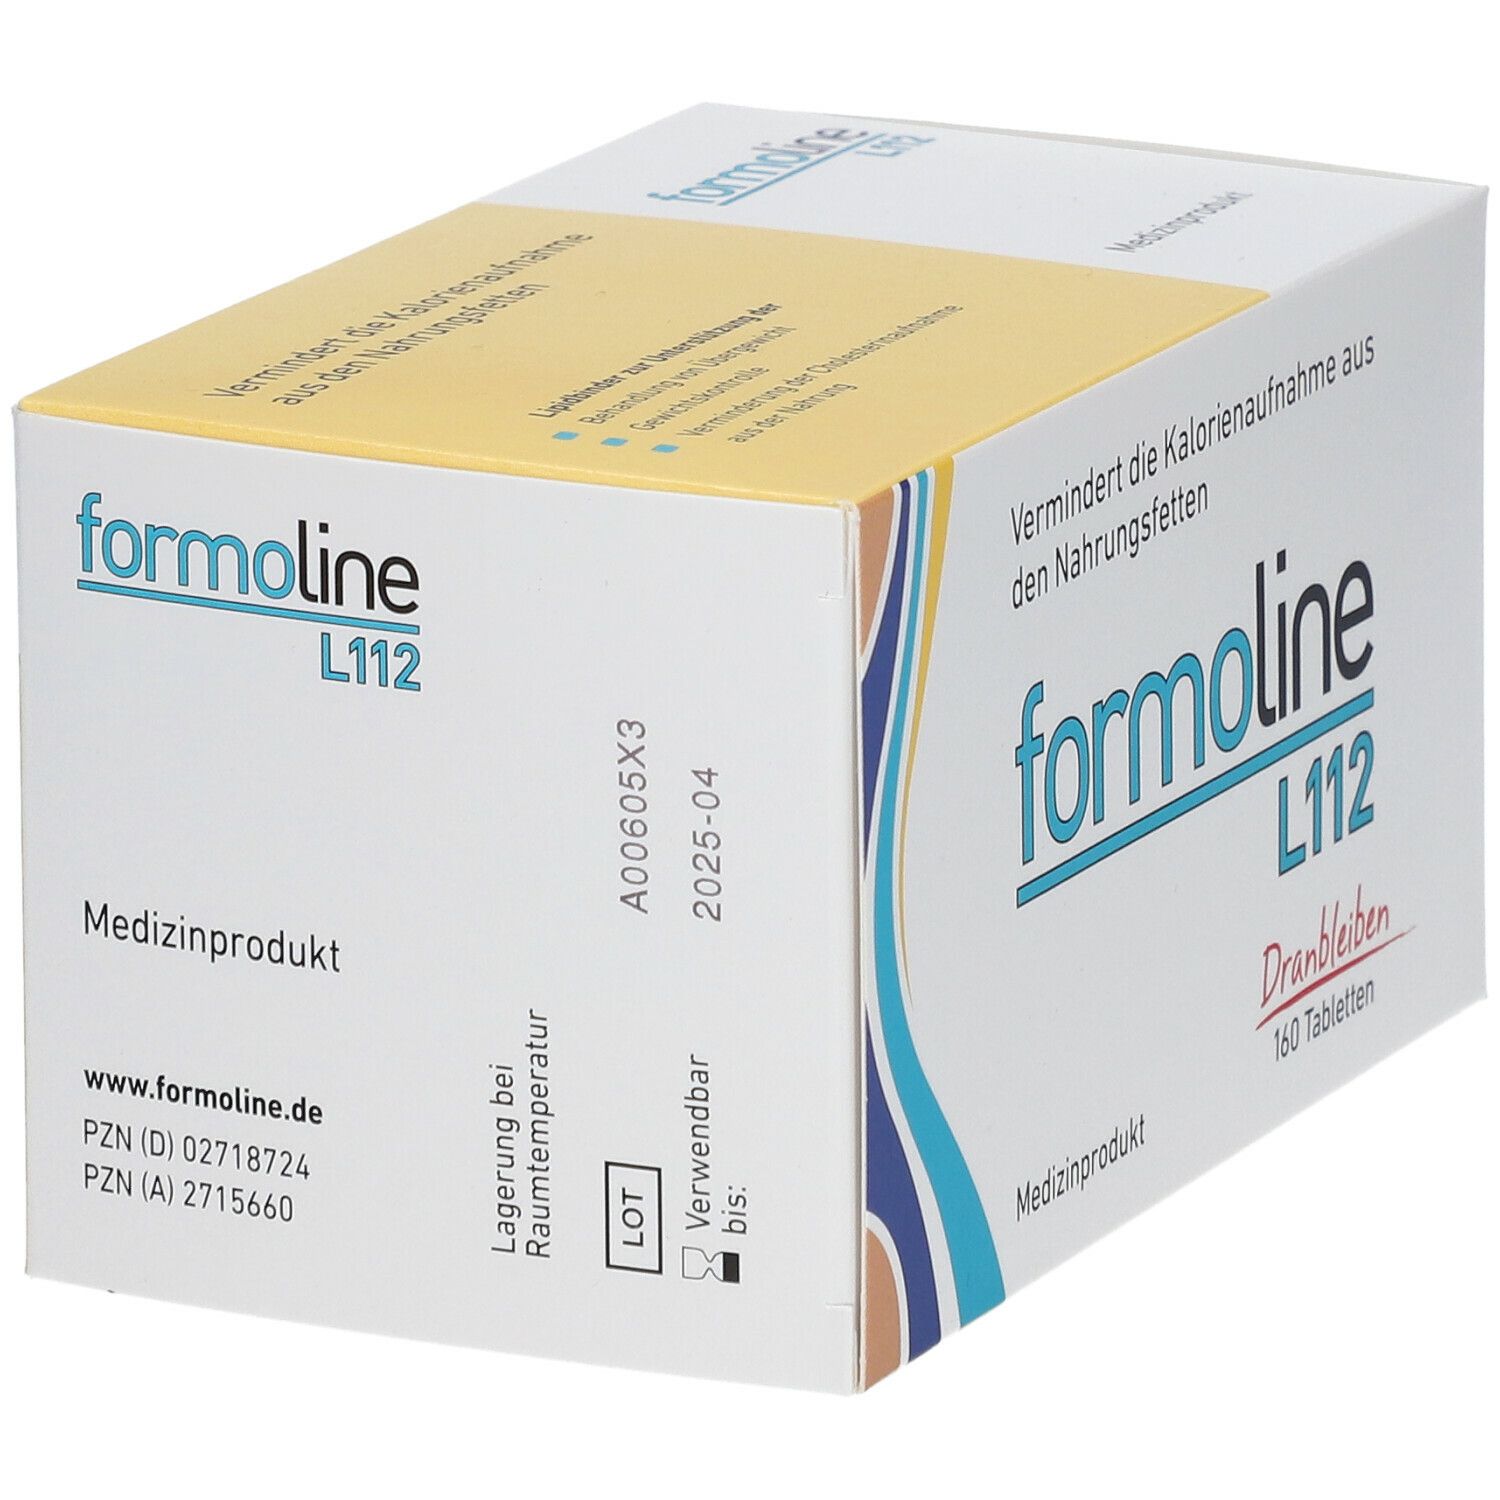 formoline L 112